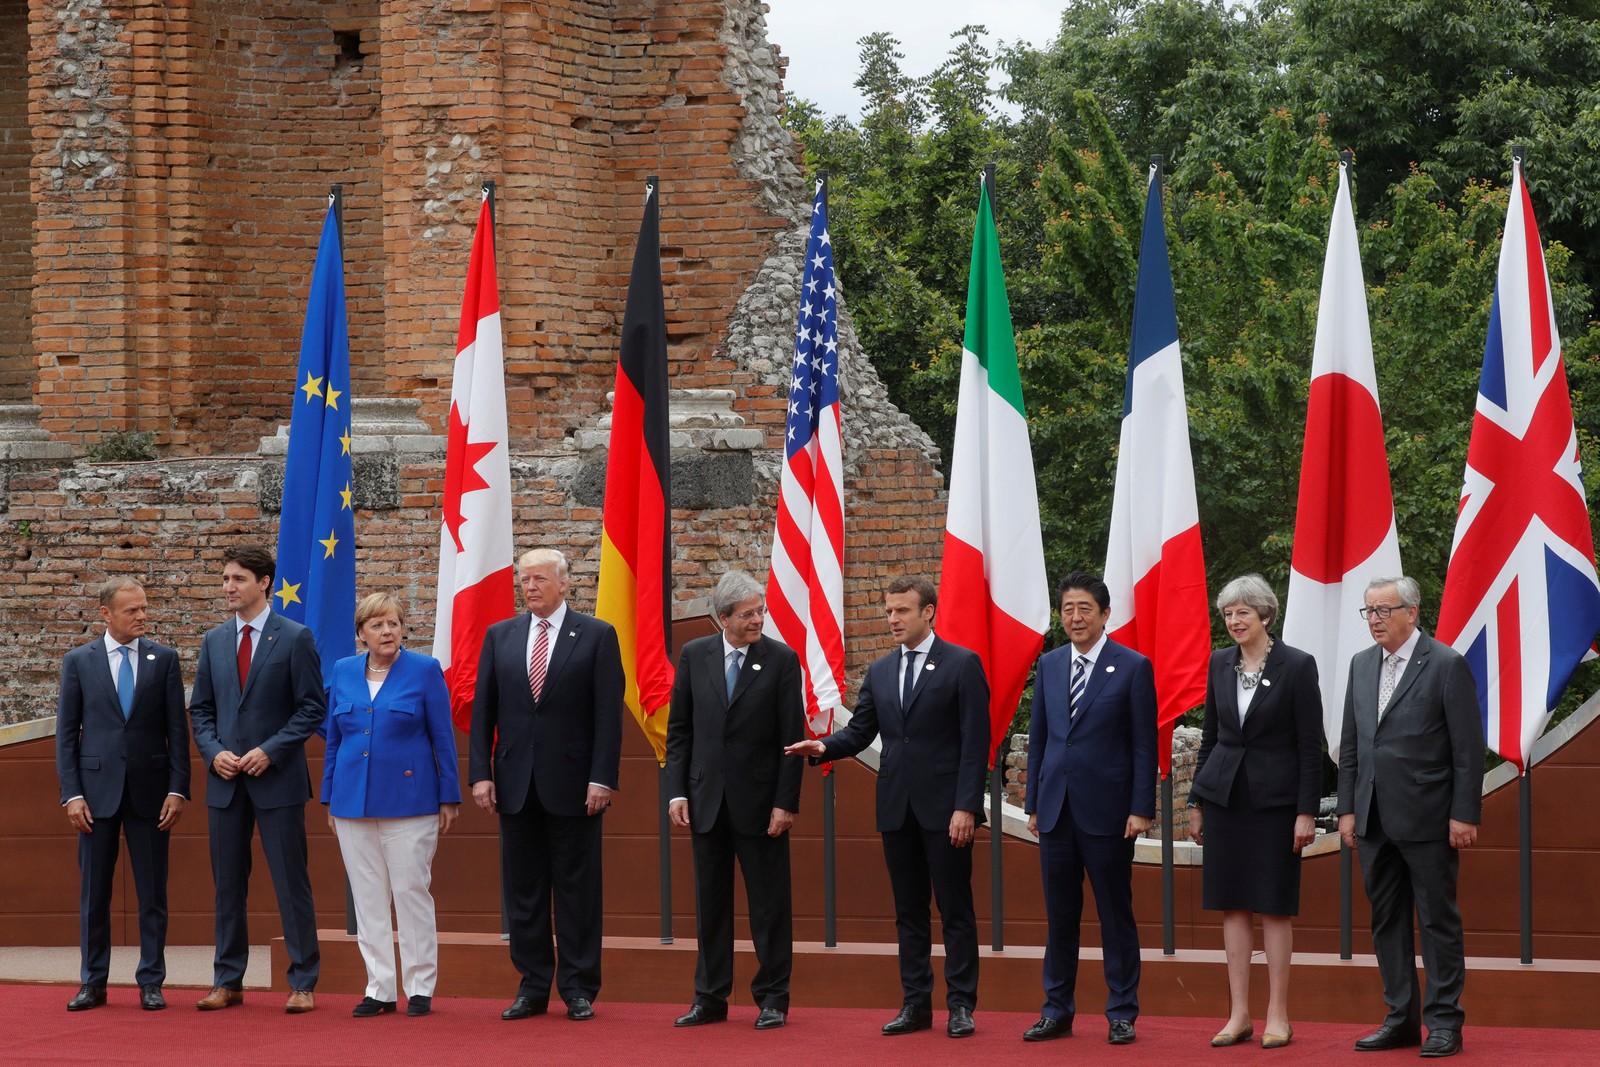 Cúpula do G7